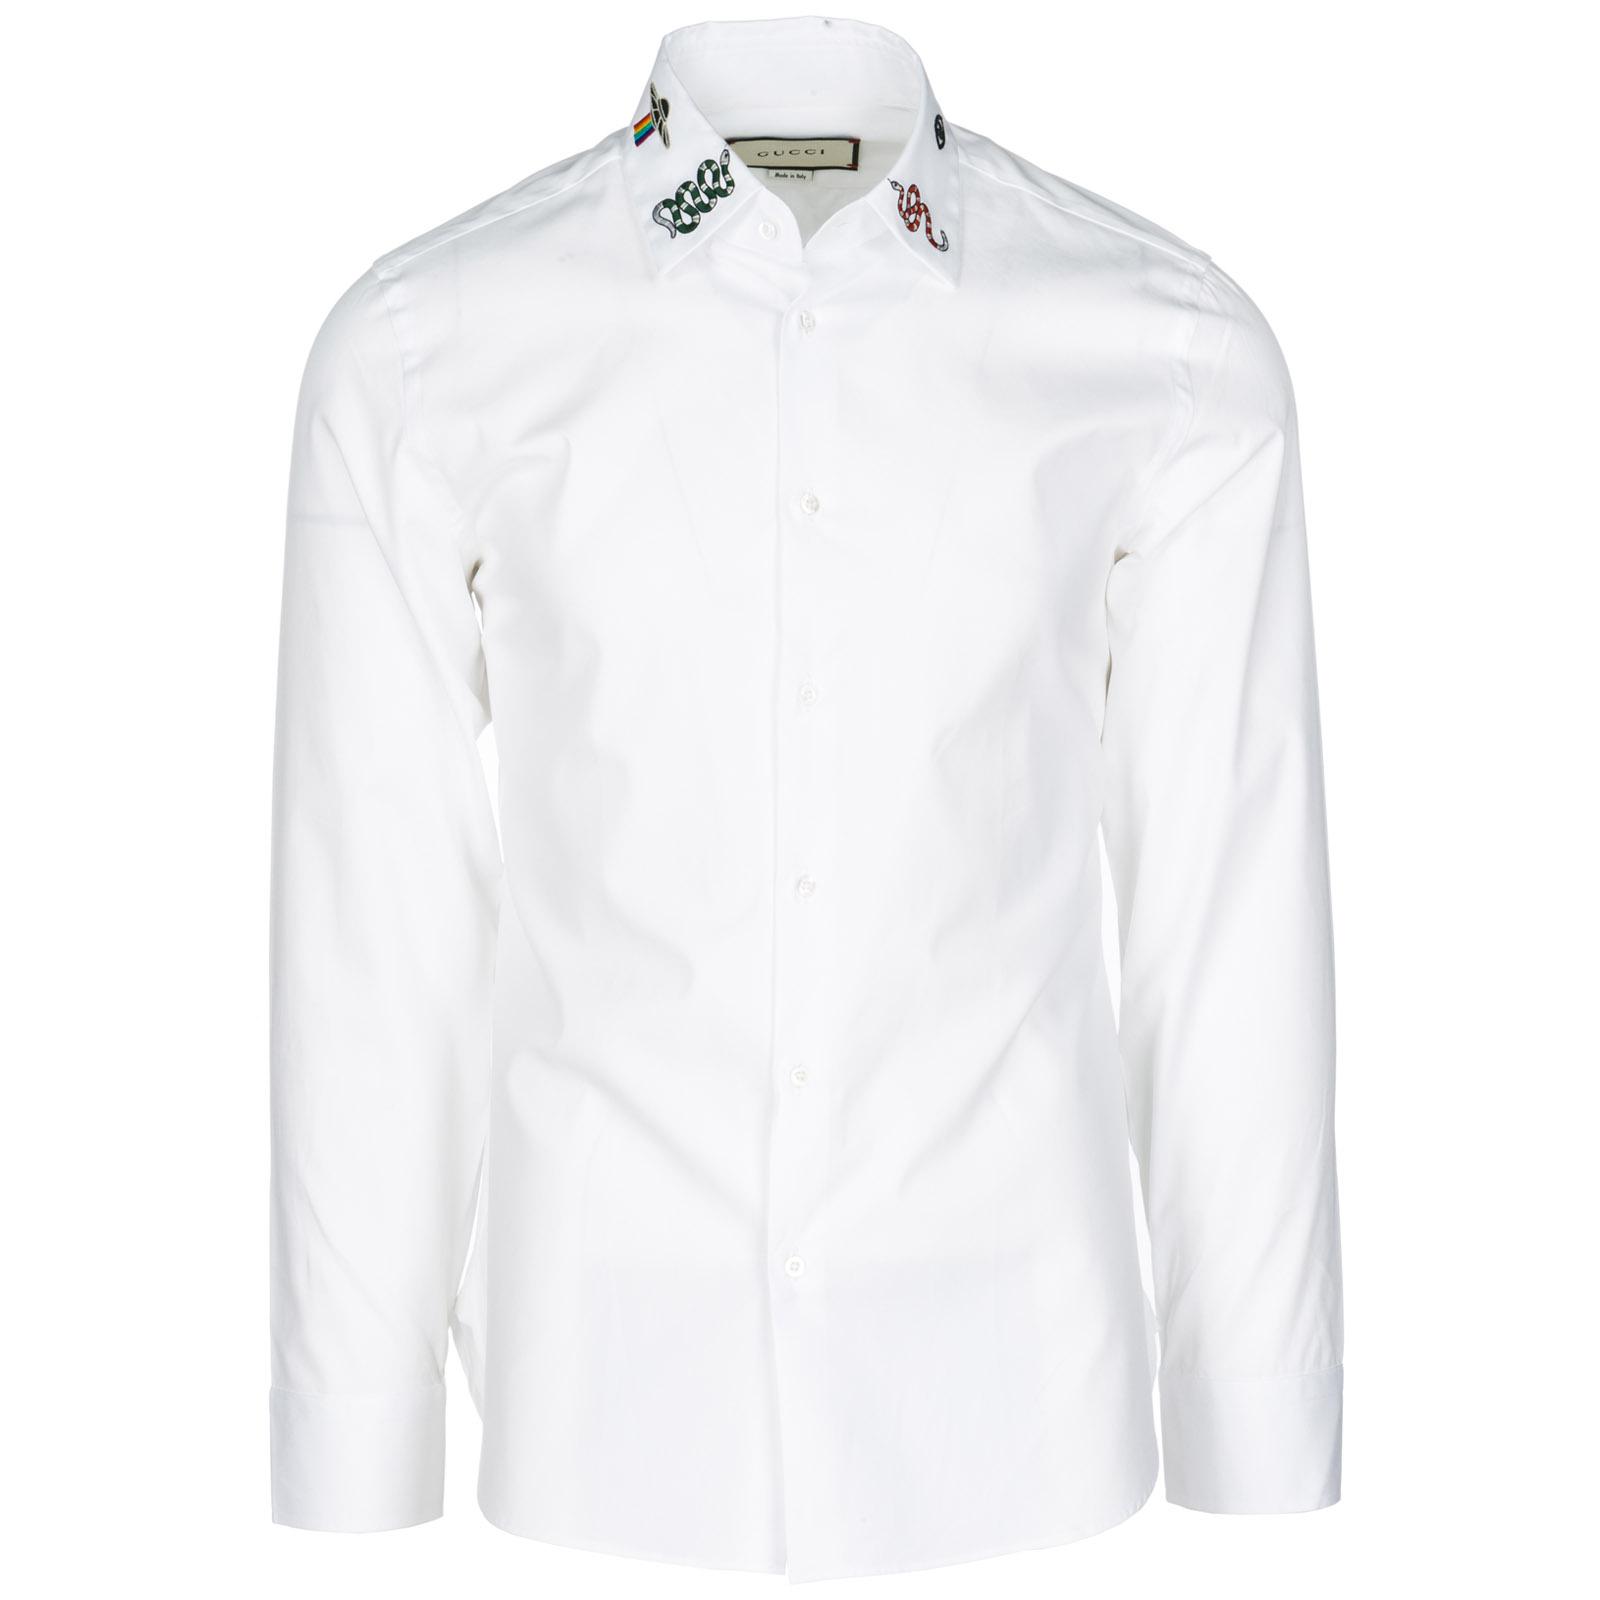 white long sleeve gucci shirt